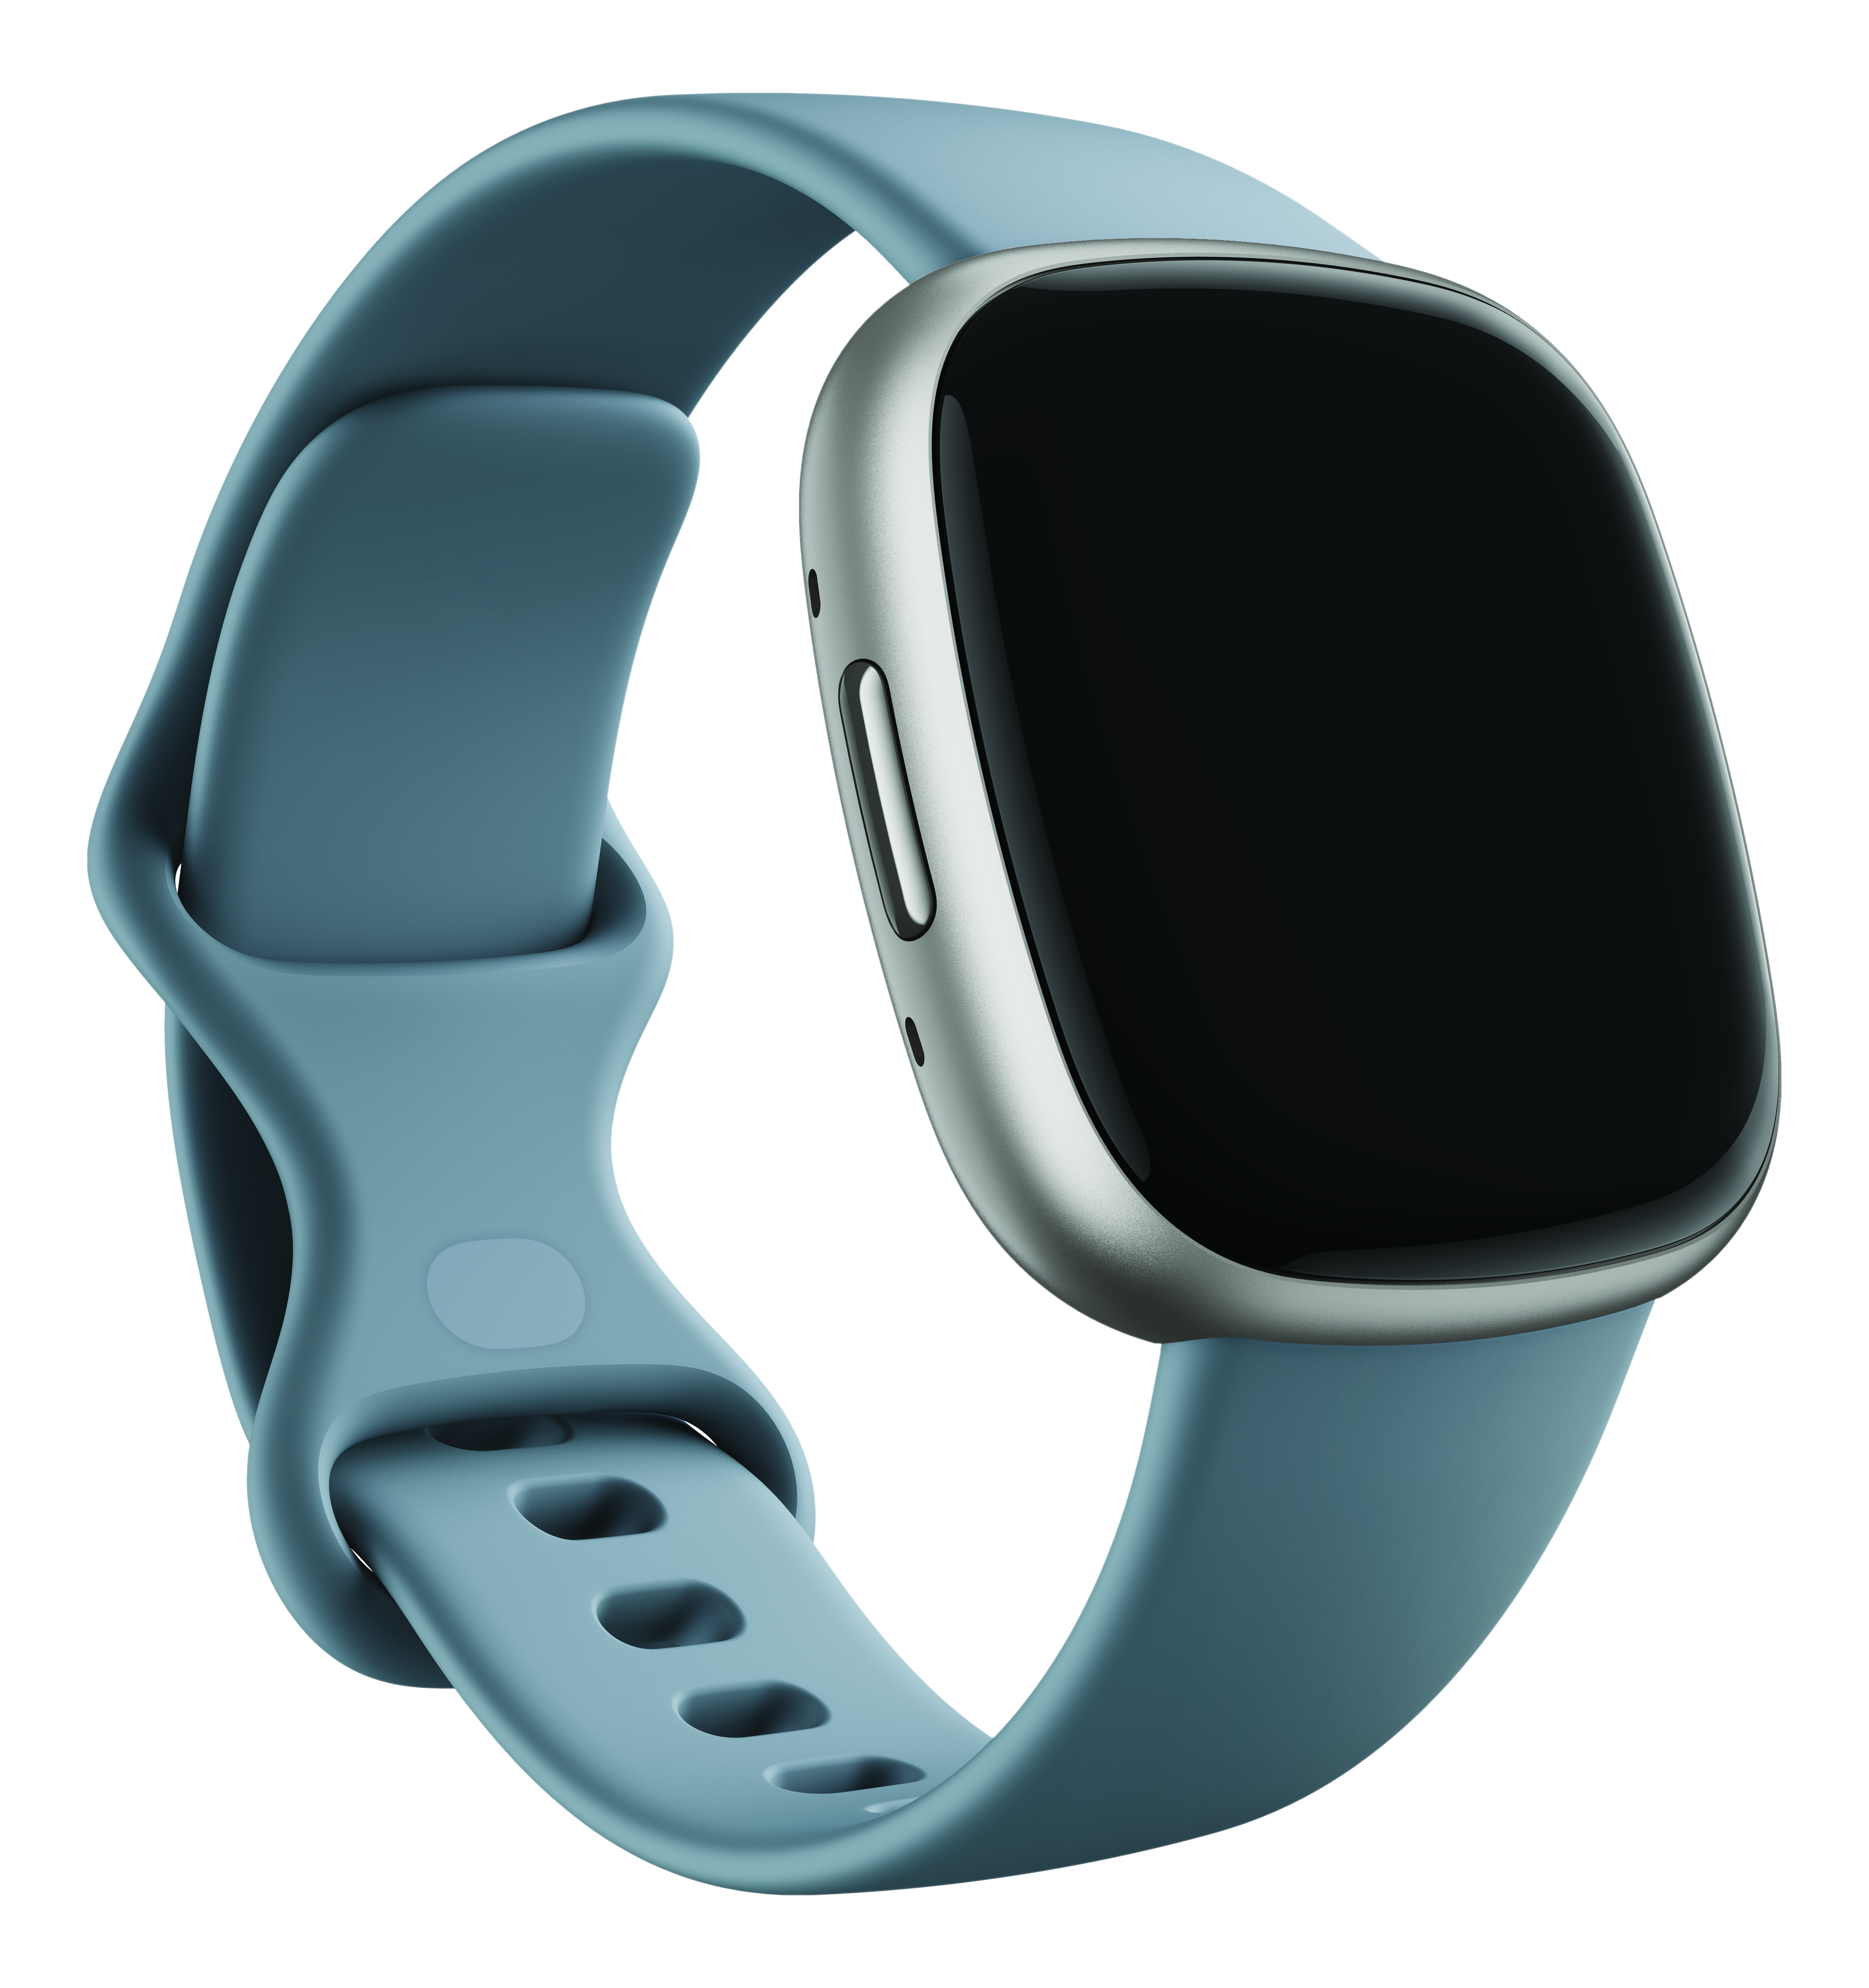 FITBIT Versa 4 - Smartwatch fitness (S: 129-175 mm, L: 158-209 mm, -, Blu/Alluminio in Platino)